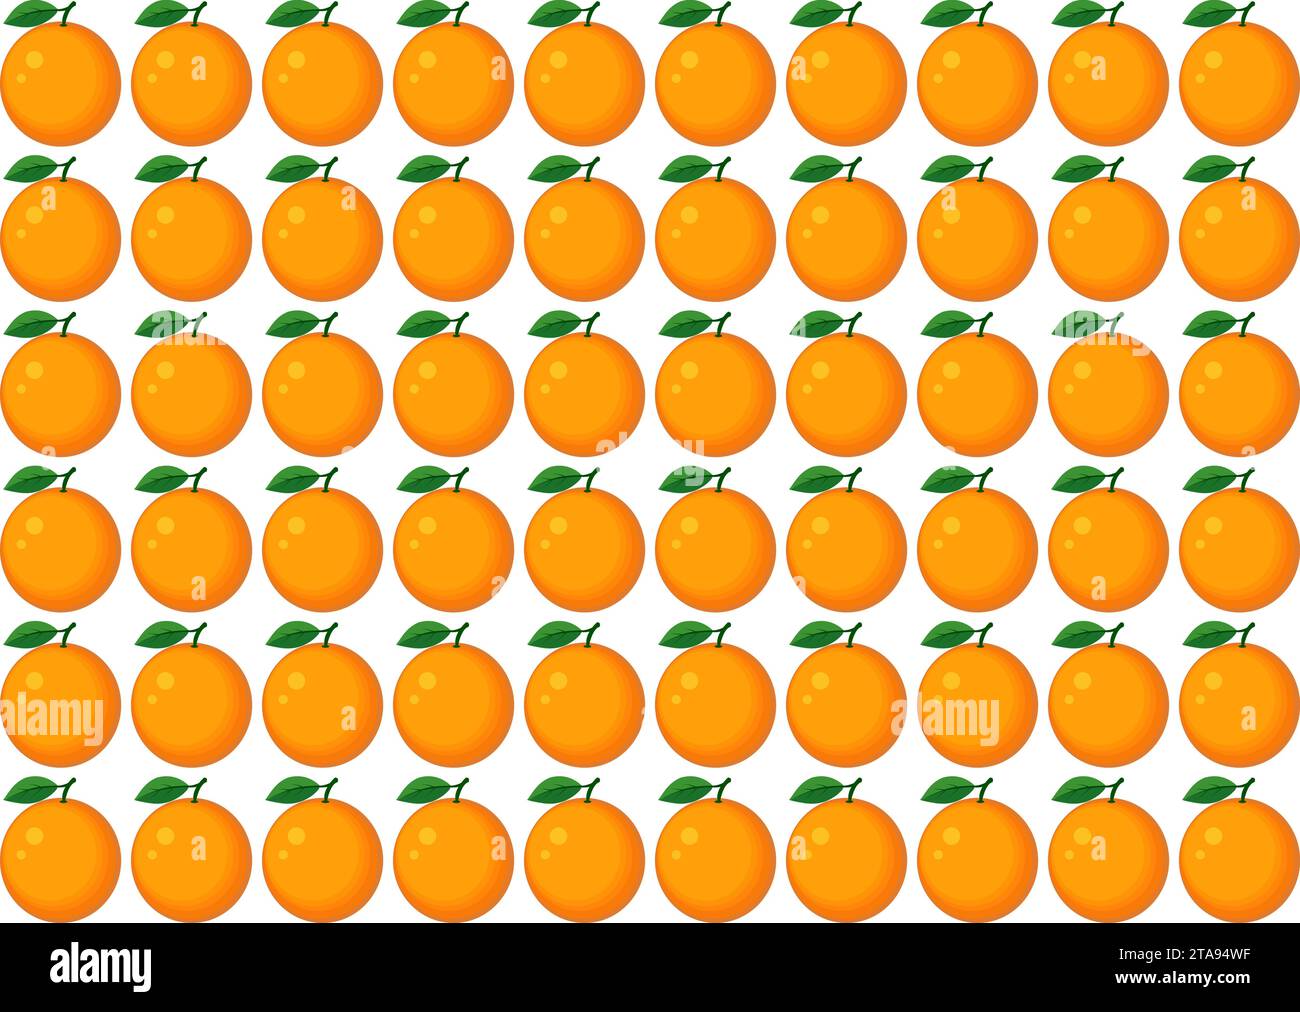 Delicious fresh Orange fruit Pattern vector illustration isolated Background colorful juicy orange Stock Vector